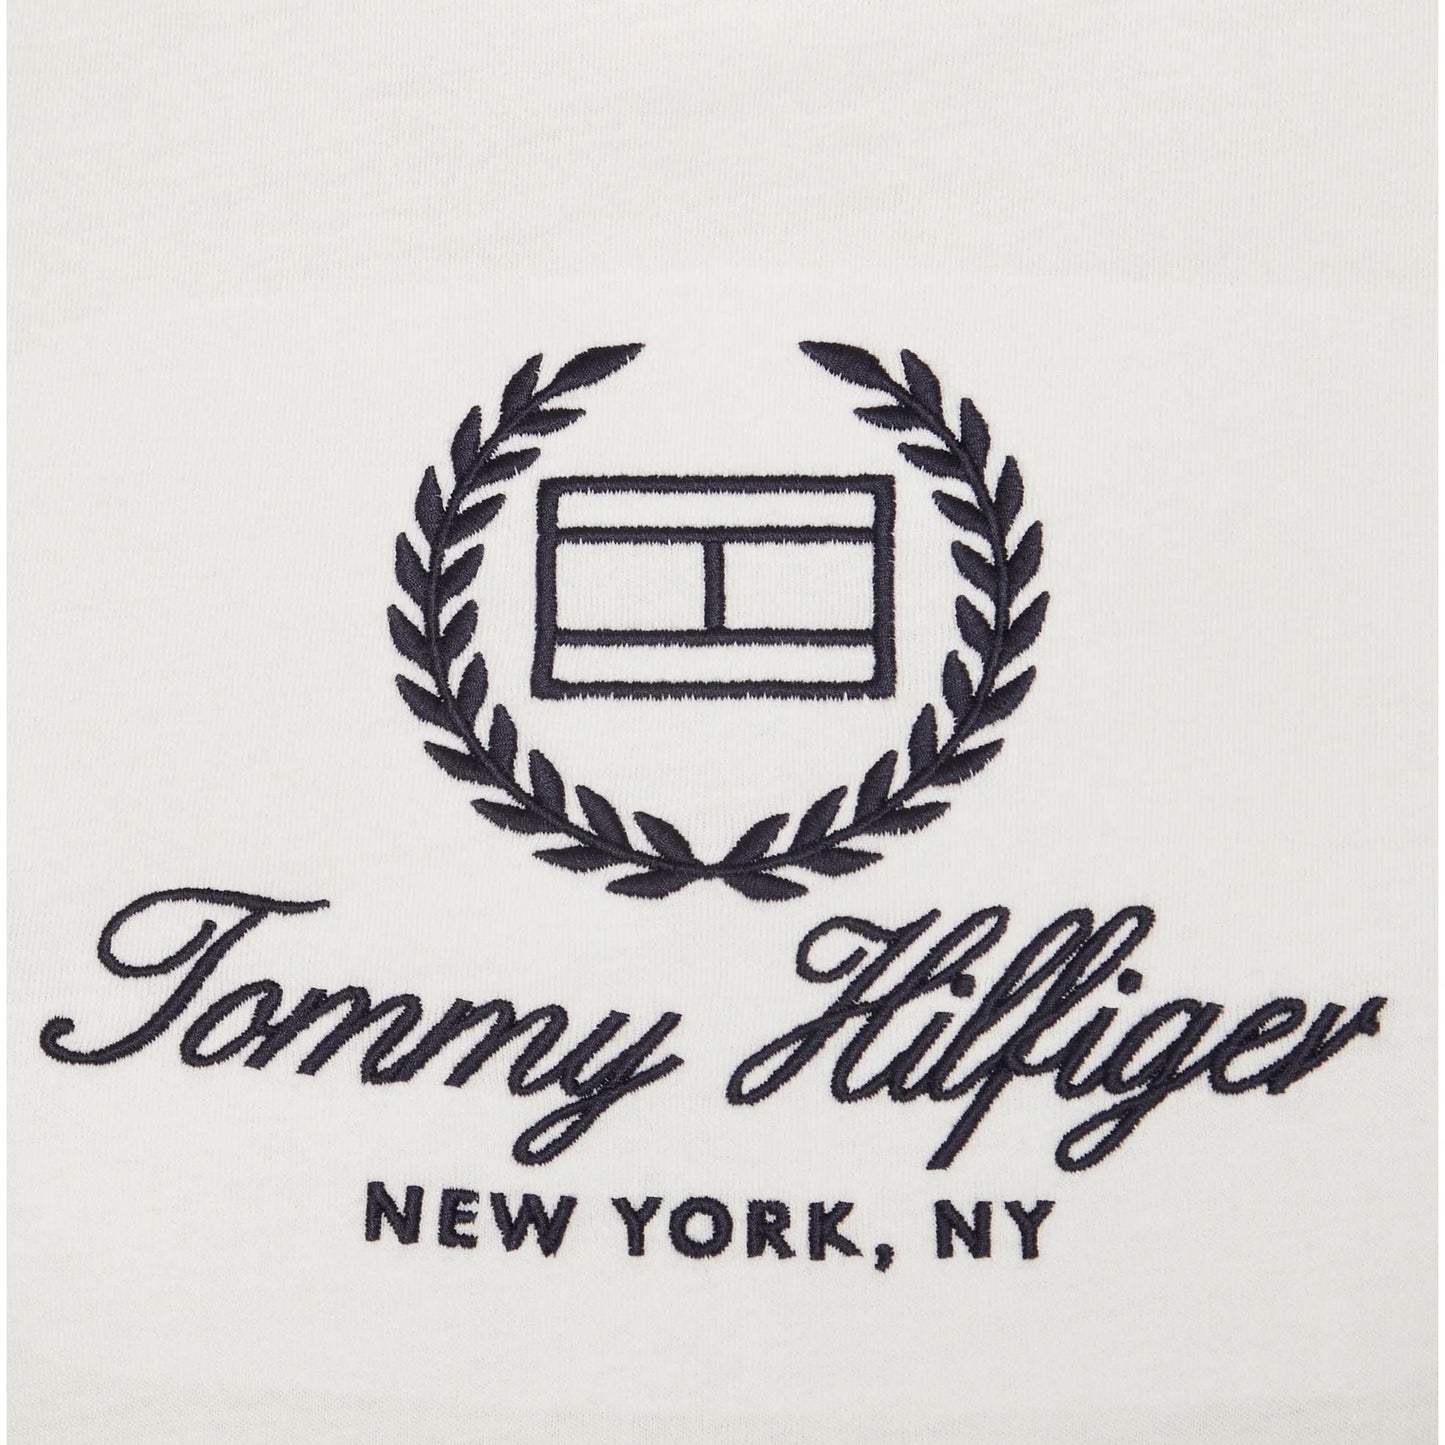 TOMMY HILFIGER marškinėliai trumpomis rankovėmis moterims, Balta, Slim flag script tee ss